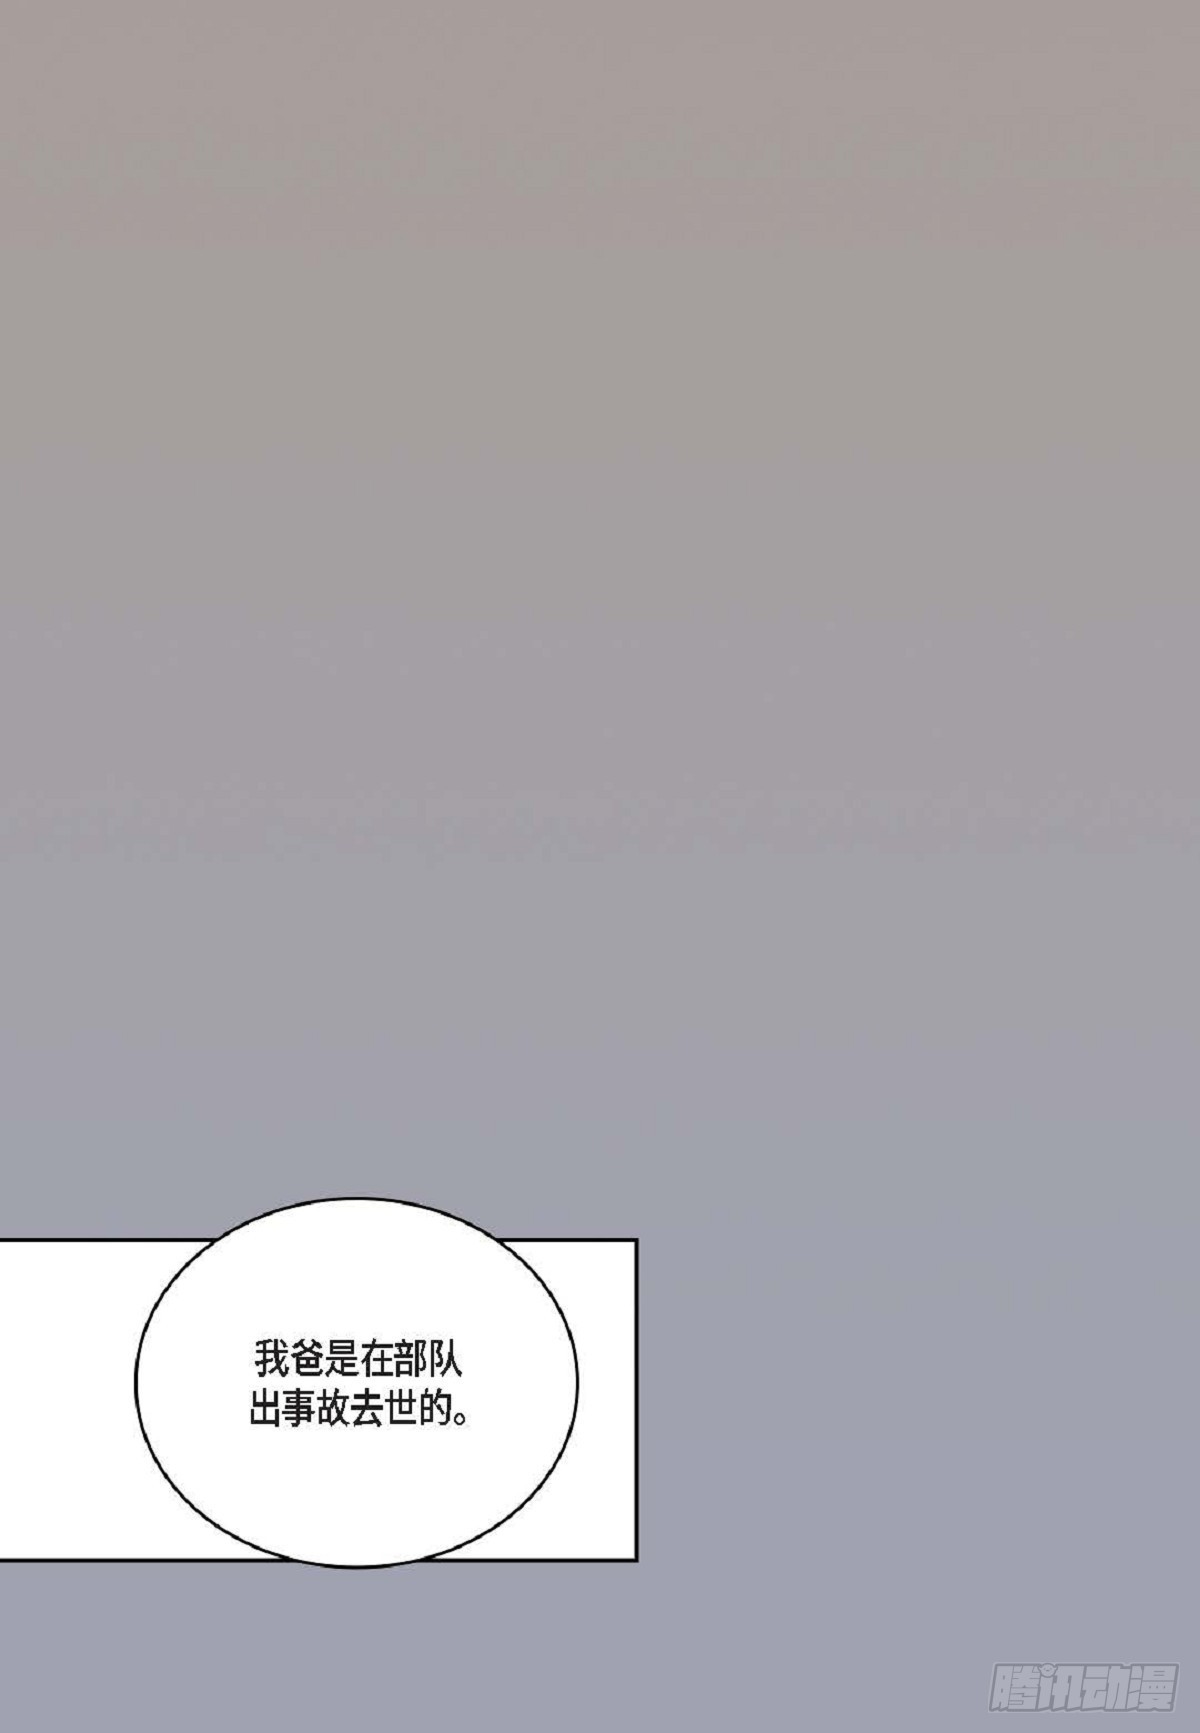 日常多情事 - ep.95(2/2) - 7